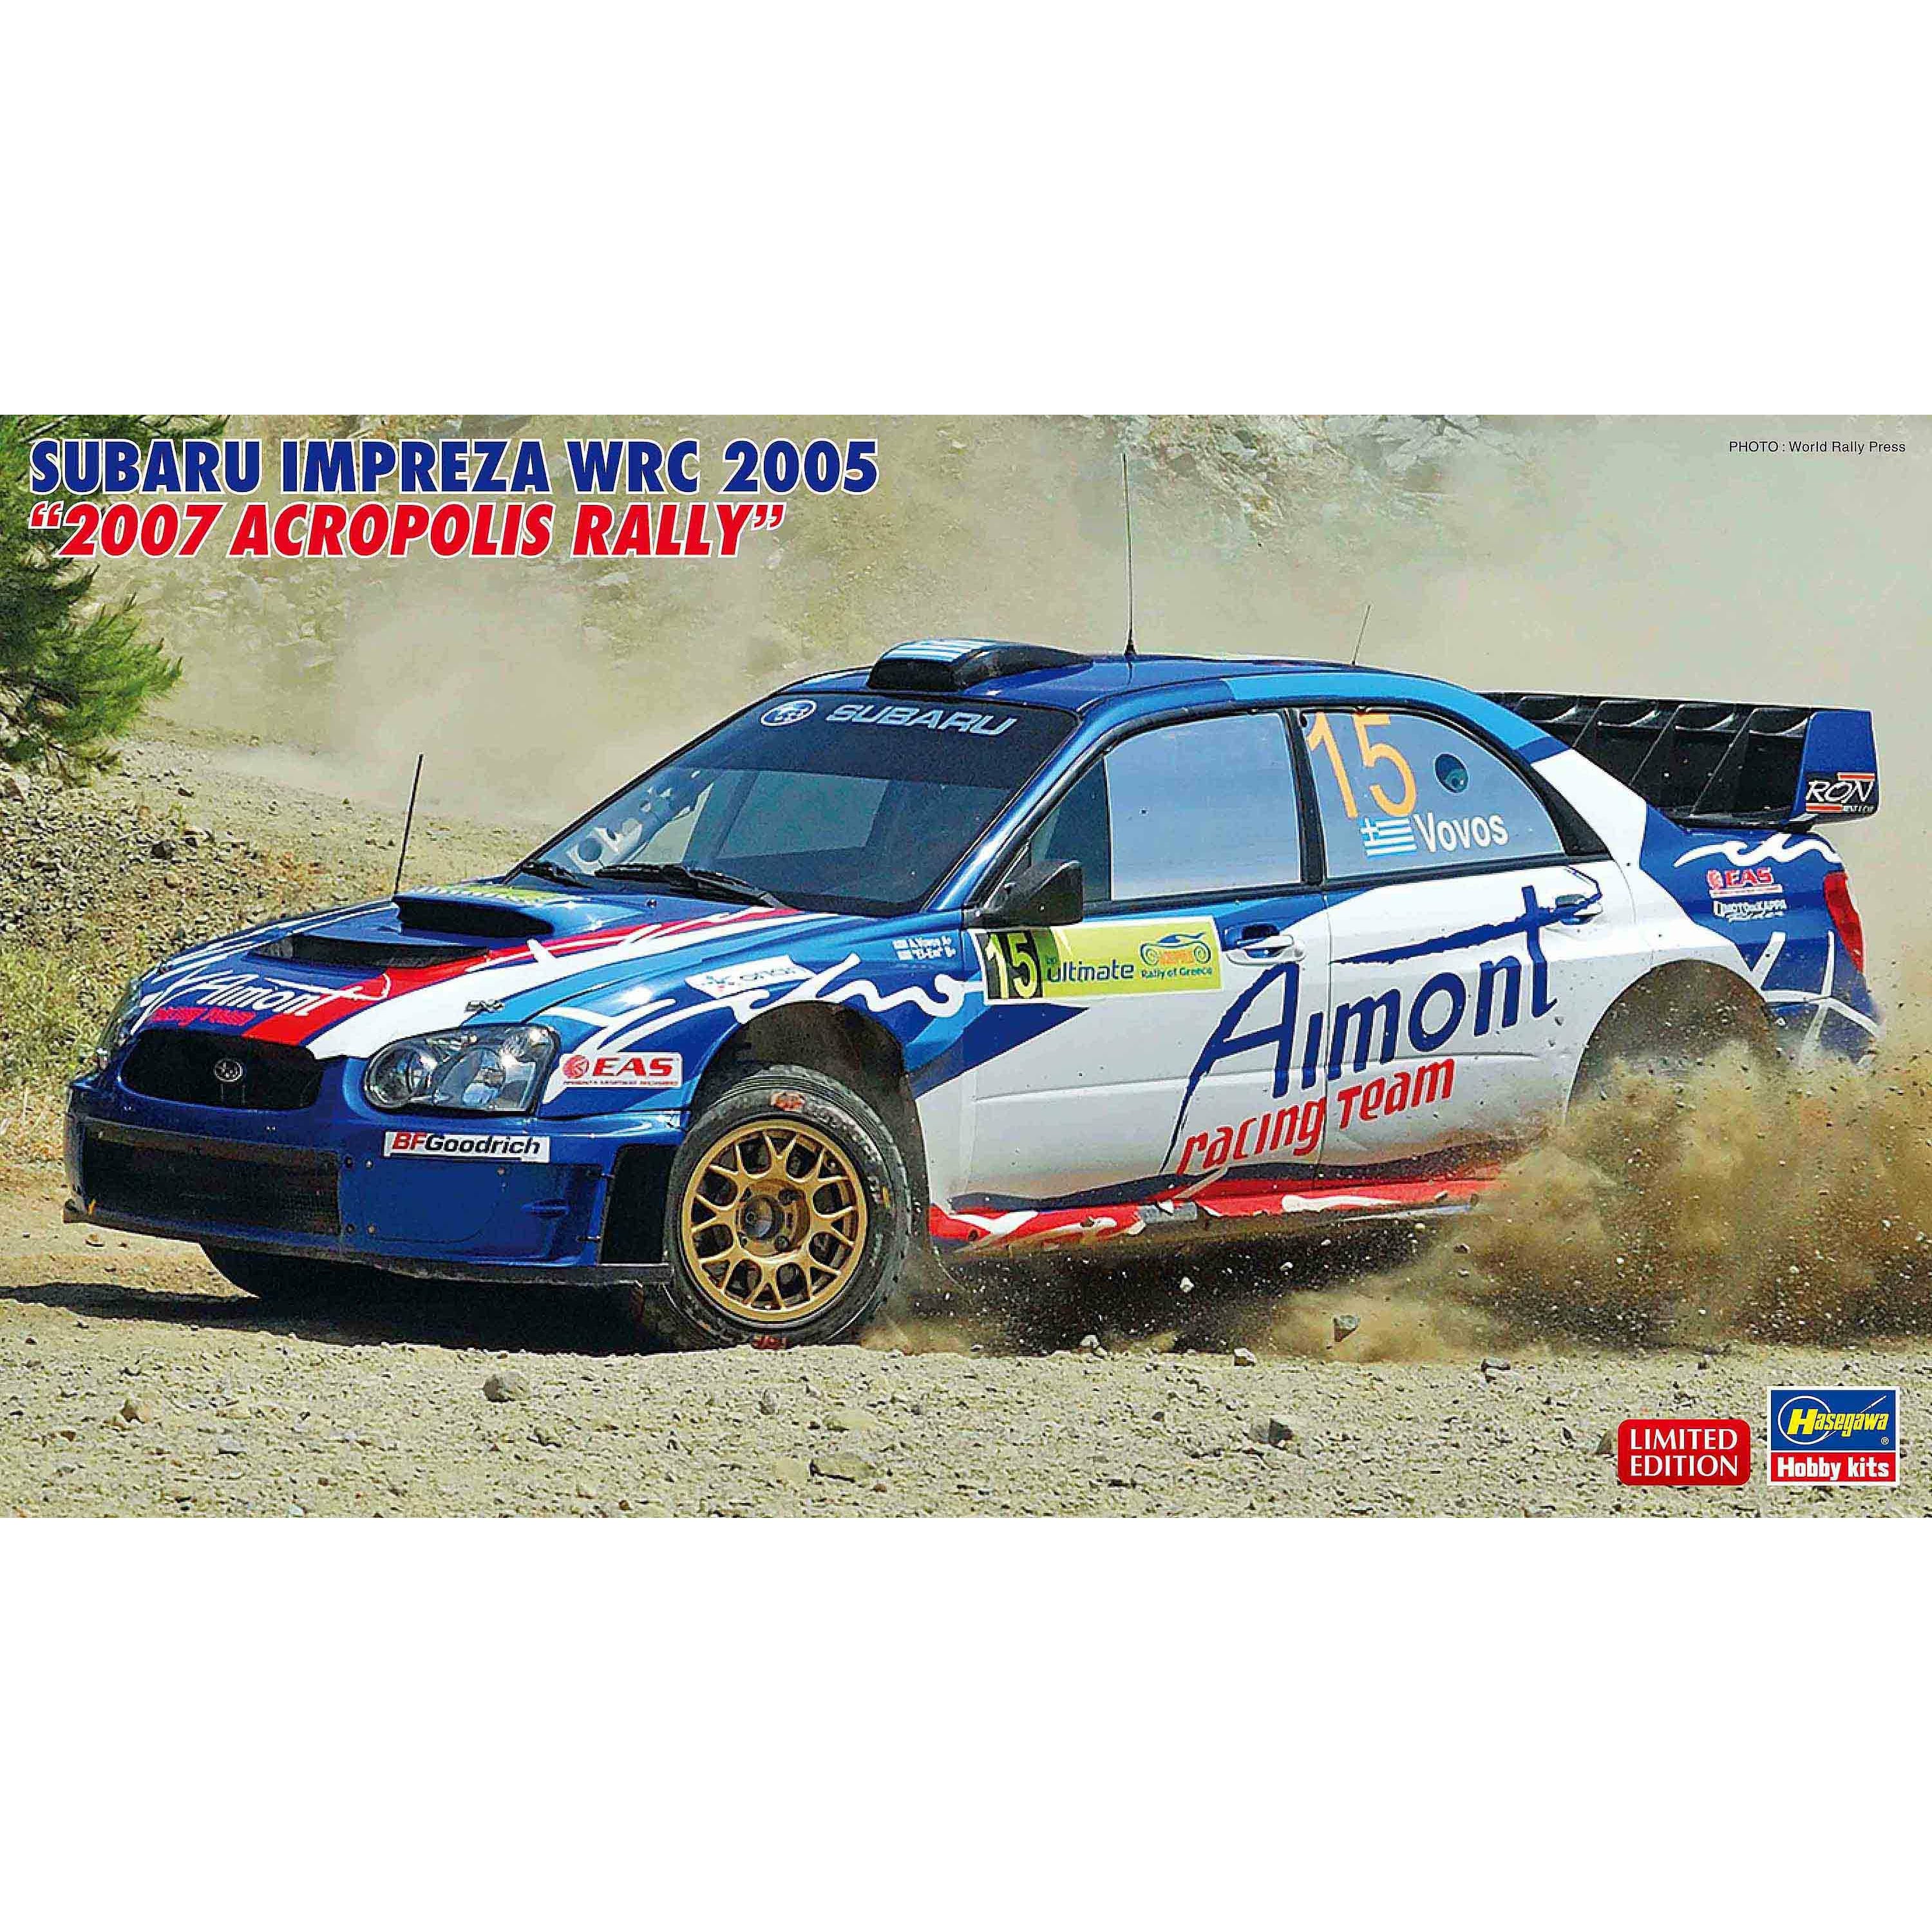 Subaru Impreza WRC 2005 "2007 Acropolis Rally" 1/24 Model Car Kit #20558 by Hasegawa